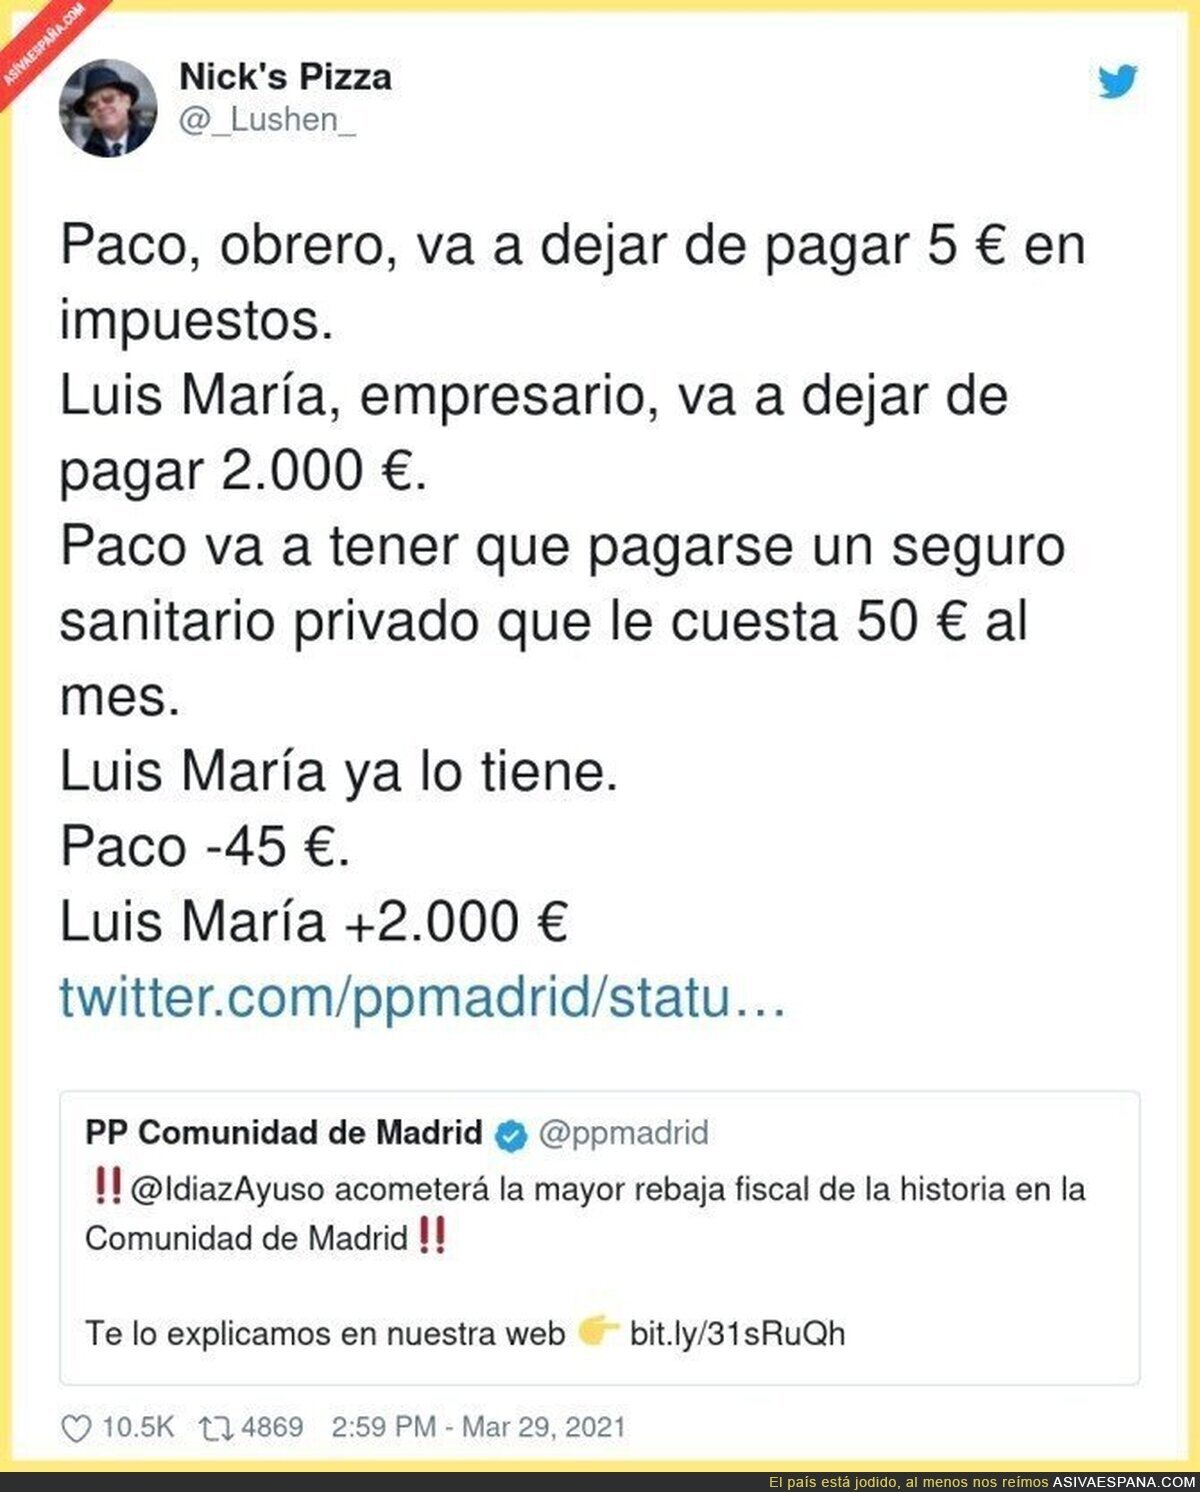 Así funciona la rebaja fiscal del PP en la Comunidad de Madrid